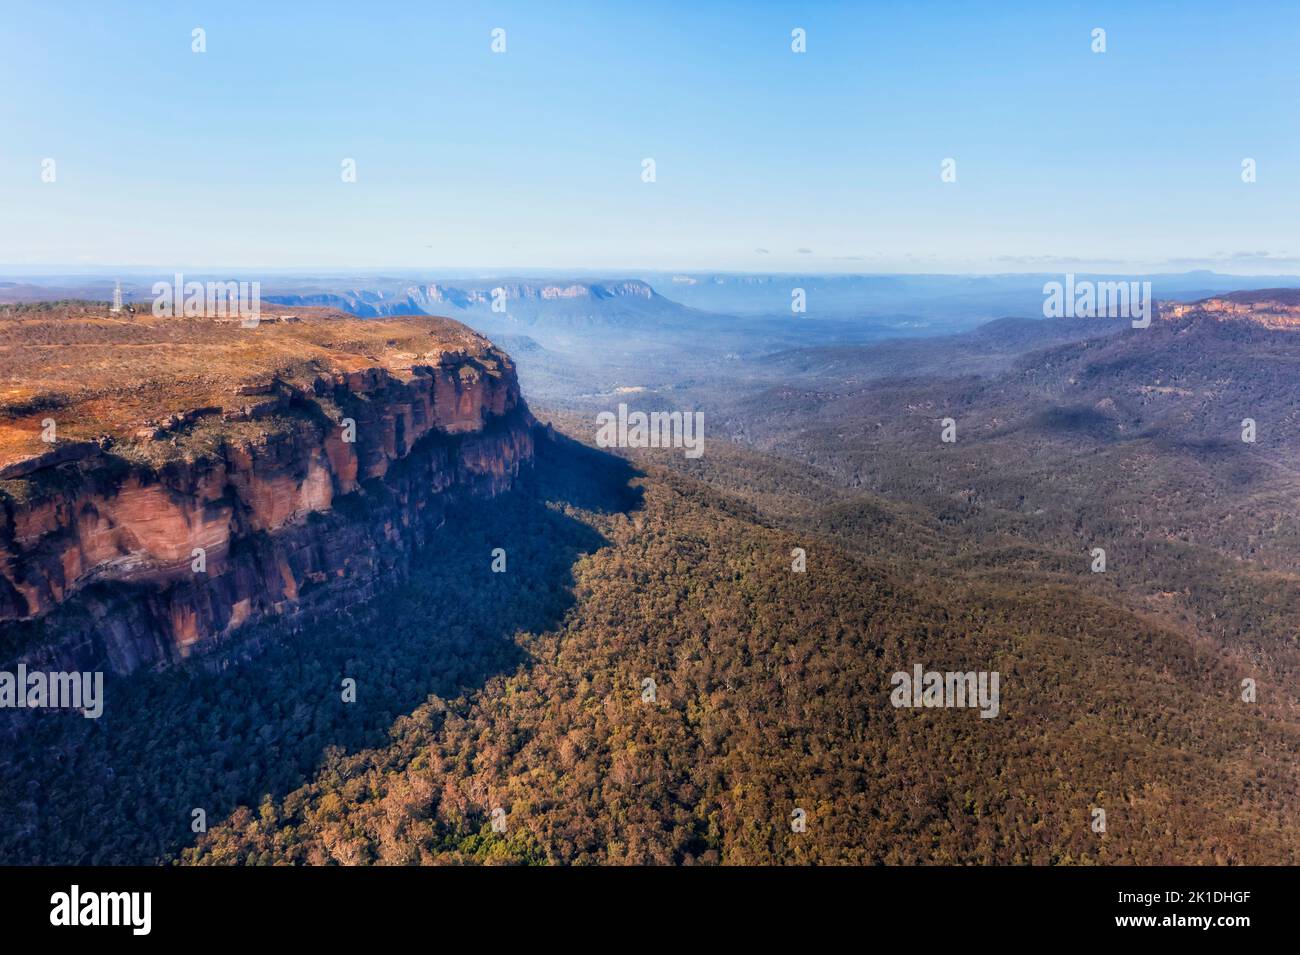 Cliff edges of sandstone rocks in Blue Mountain national park of Australia - aerial landscape. Stock Photo